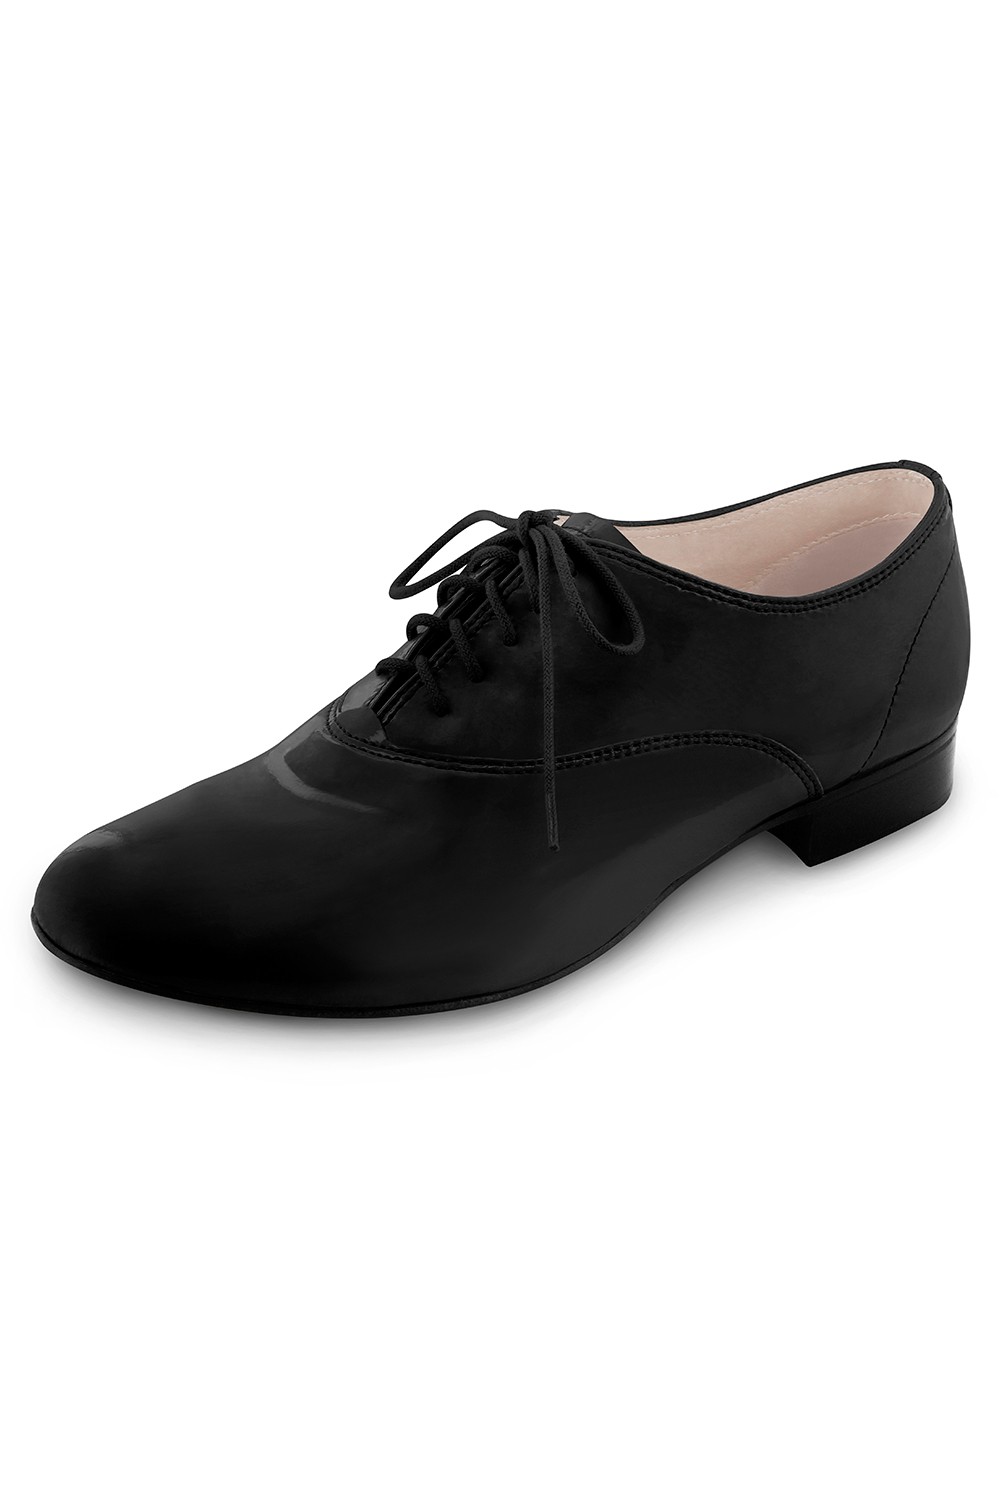 BLOCH® Women's Ballet Flat Shoes - BLOCH® US Store